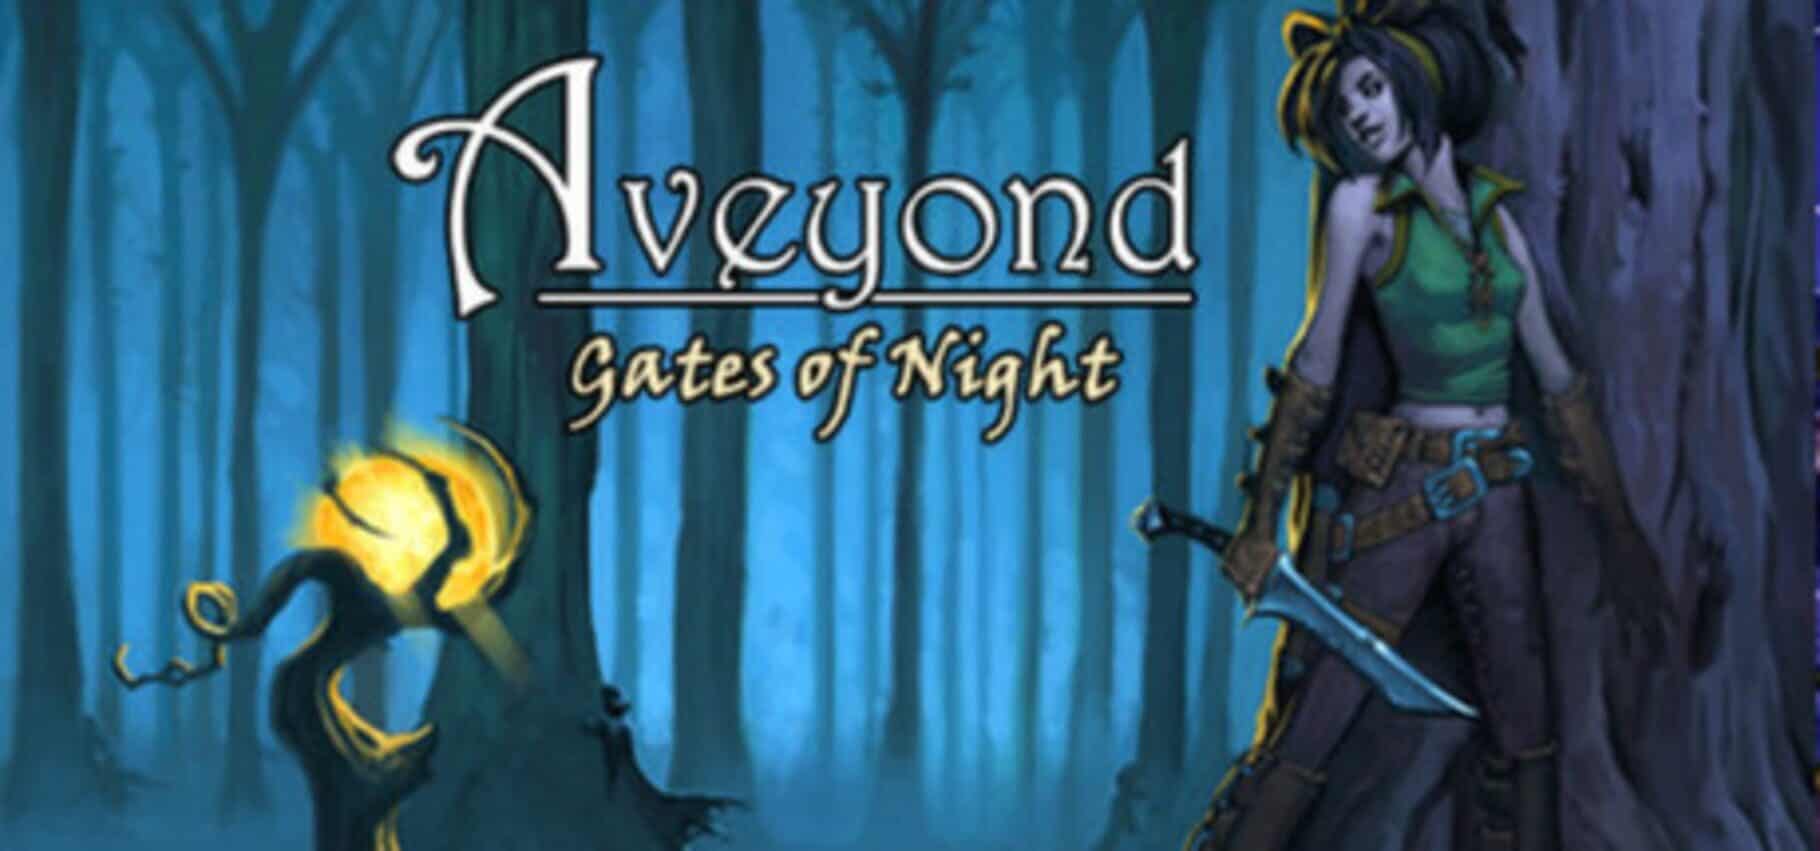 Aveyond - Gates of Night